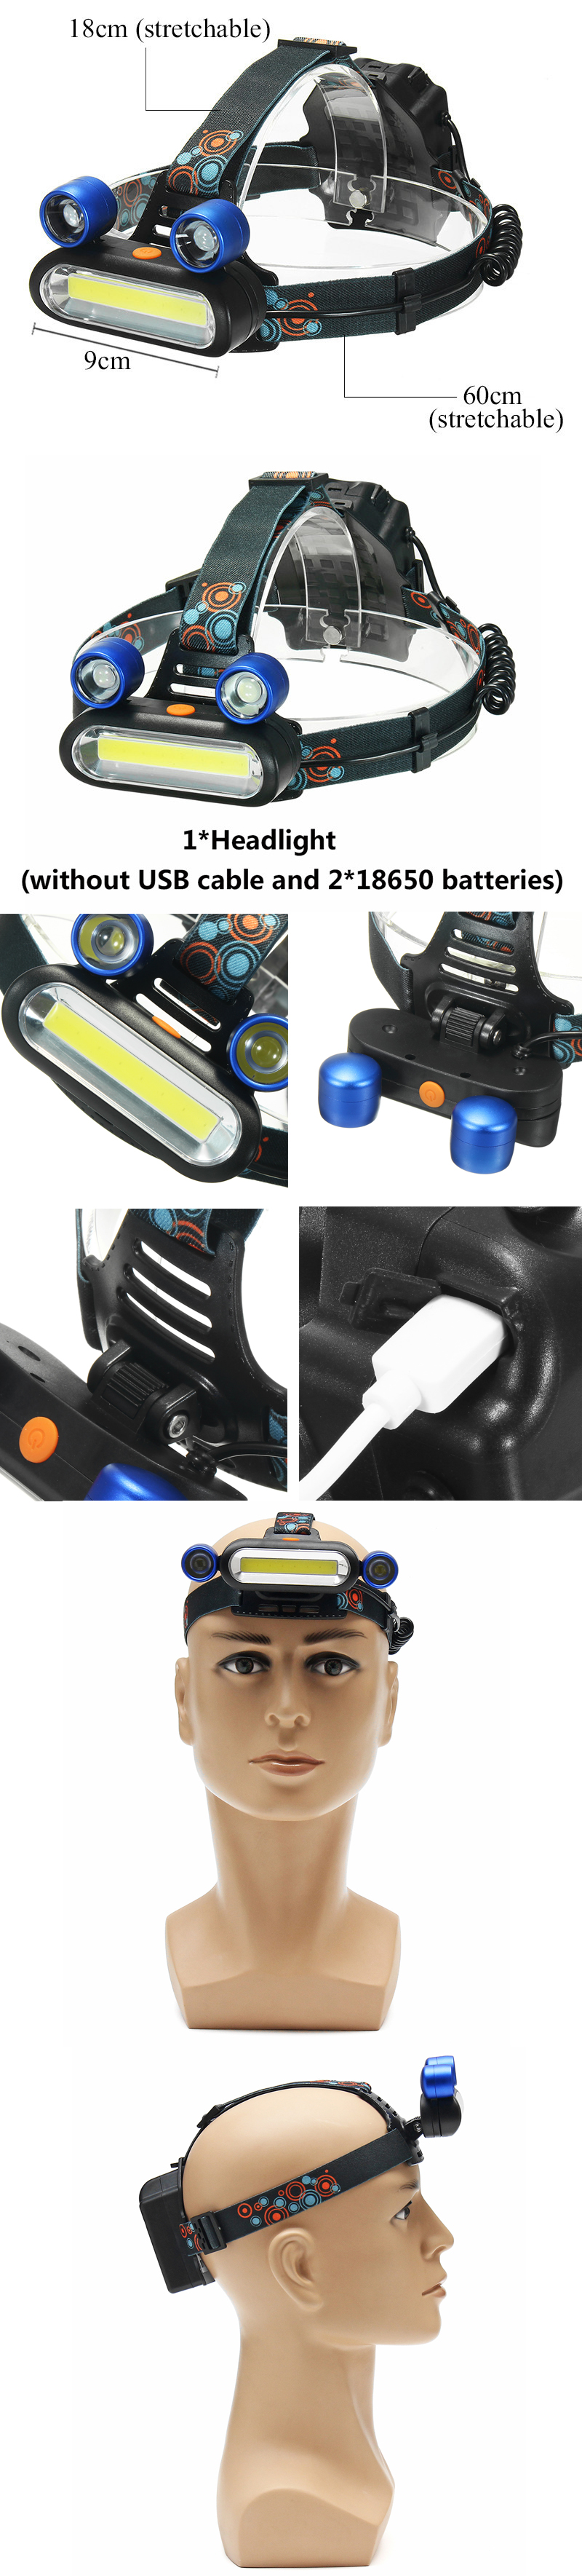 1500LM-T6-COB-LED-Headlamp-Outdoor-Bike-Hiking-Camping-Flashlight-Emergency-Lantern-1419947